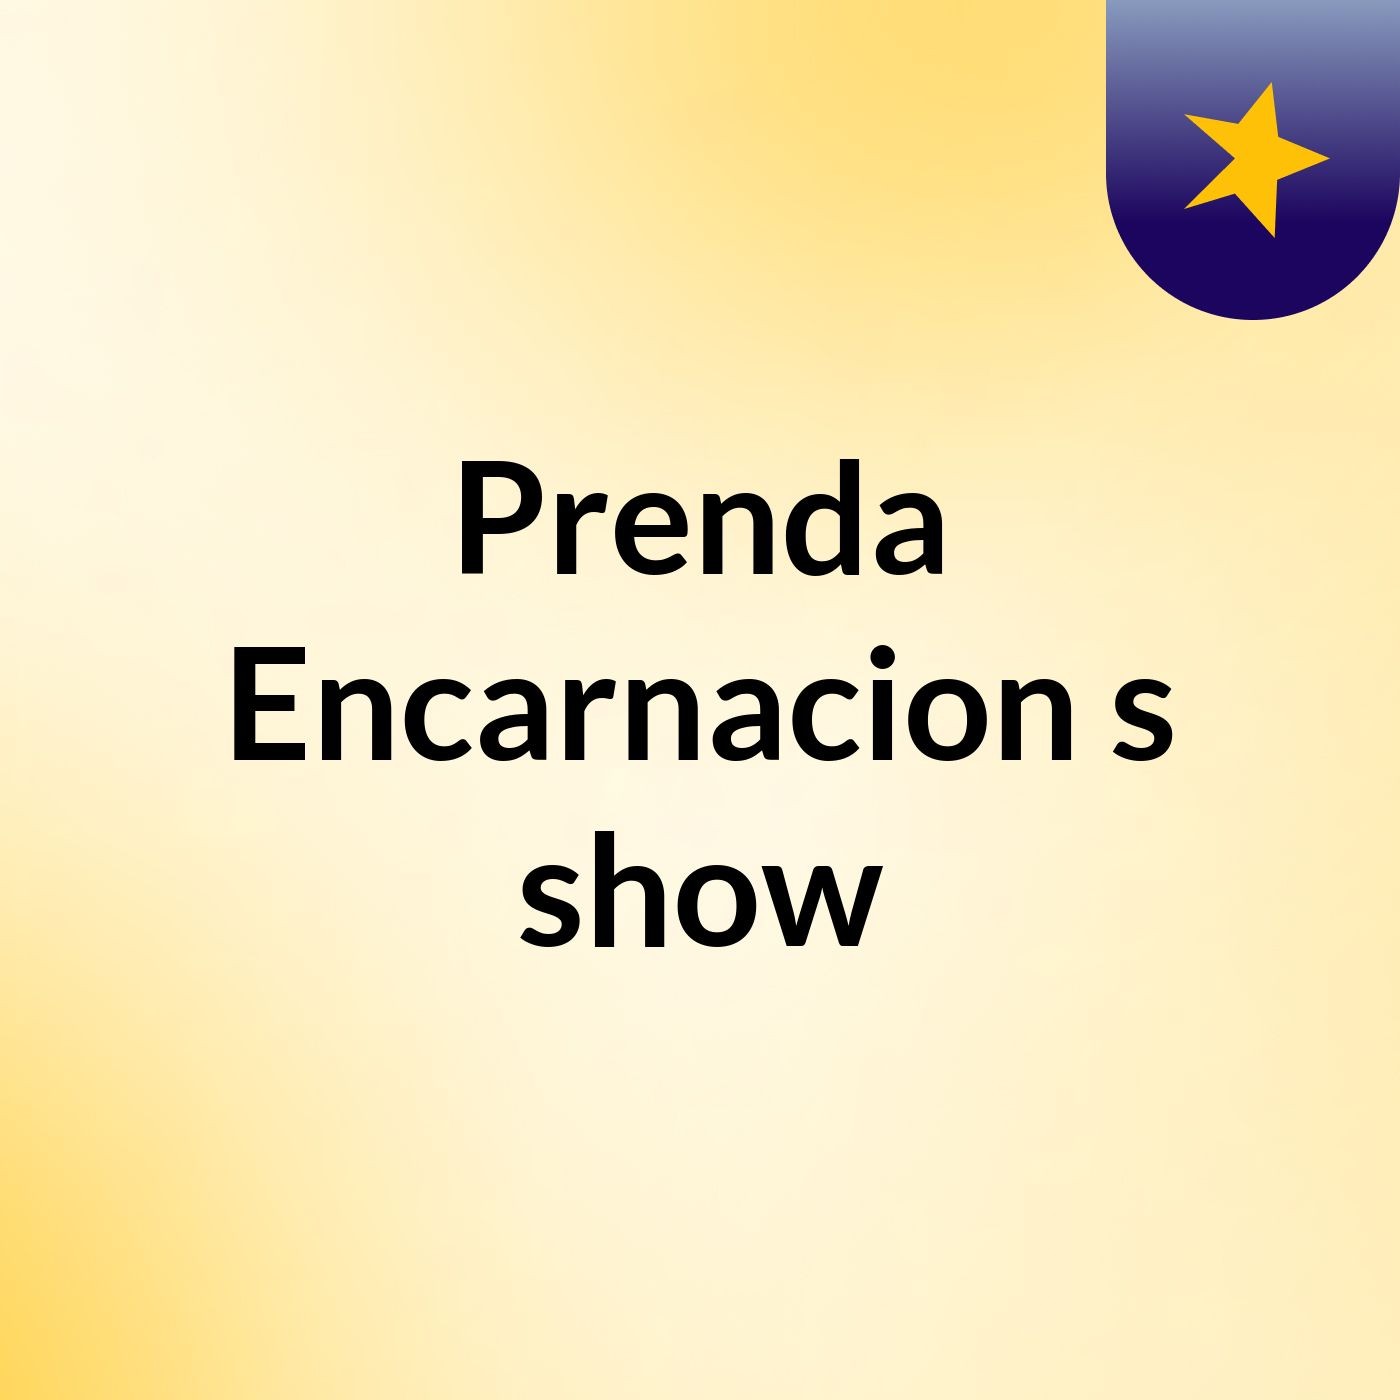 Prenda Encarnacion's show